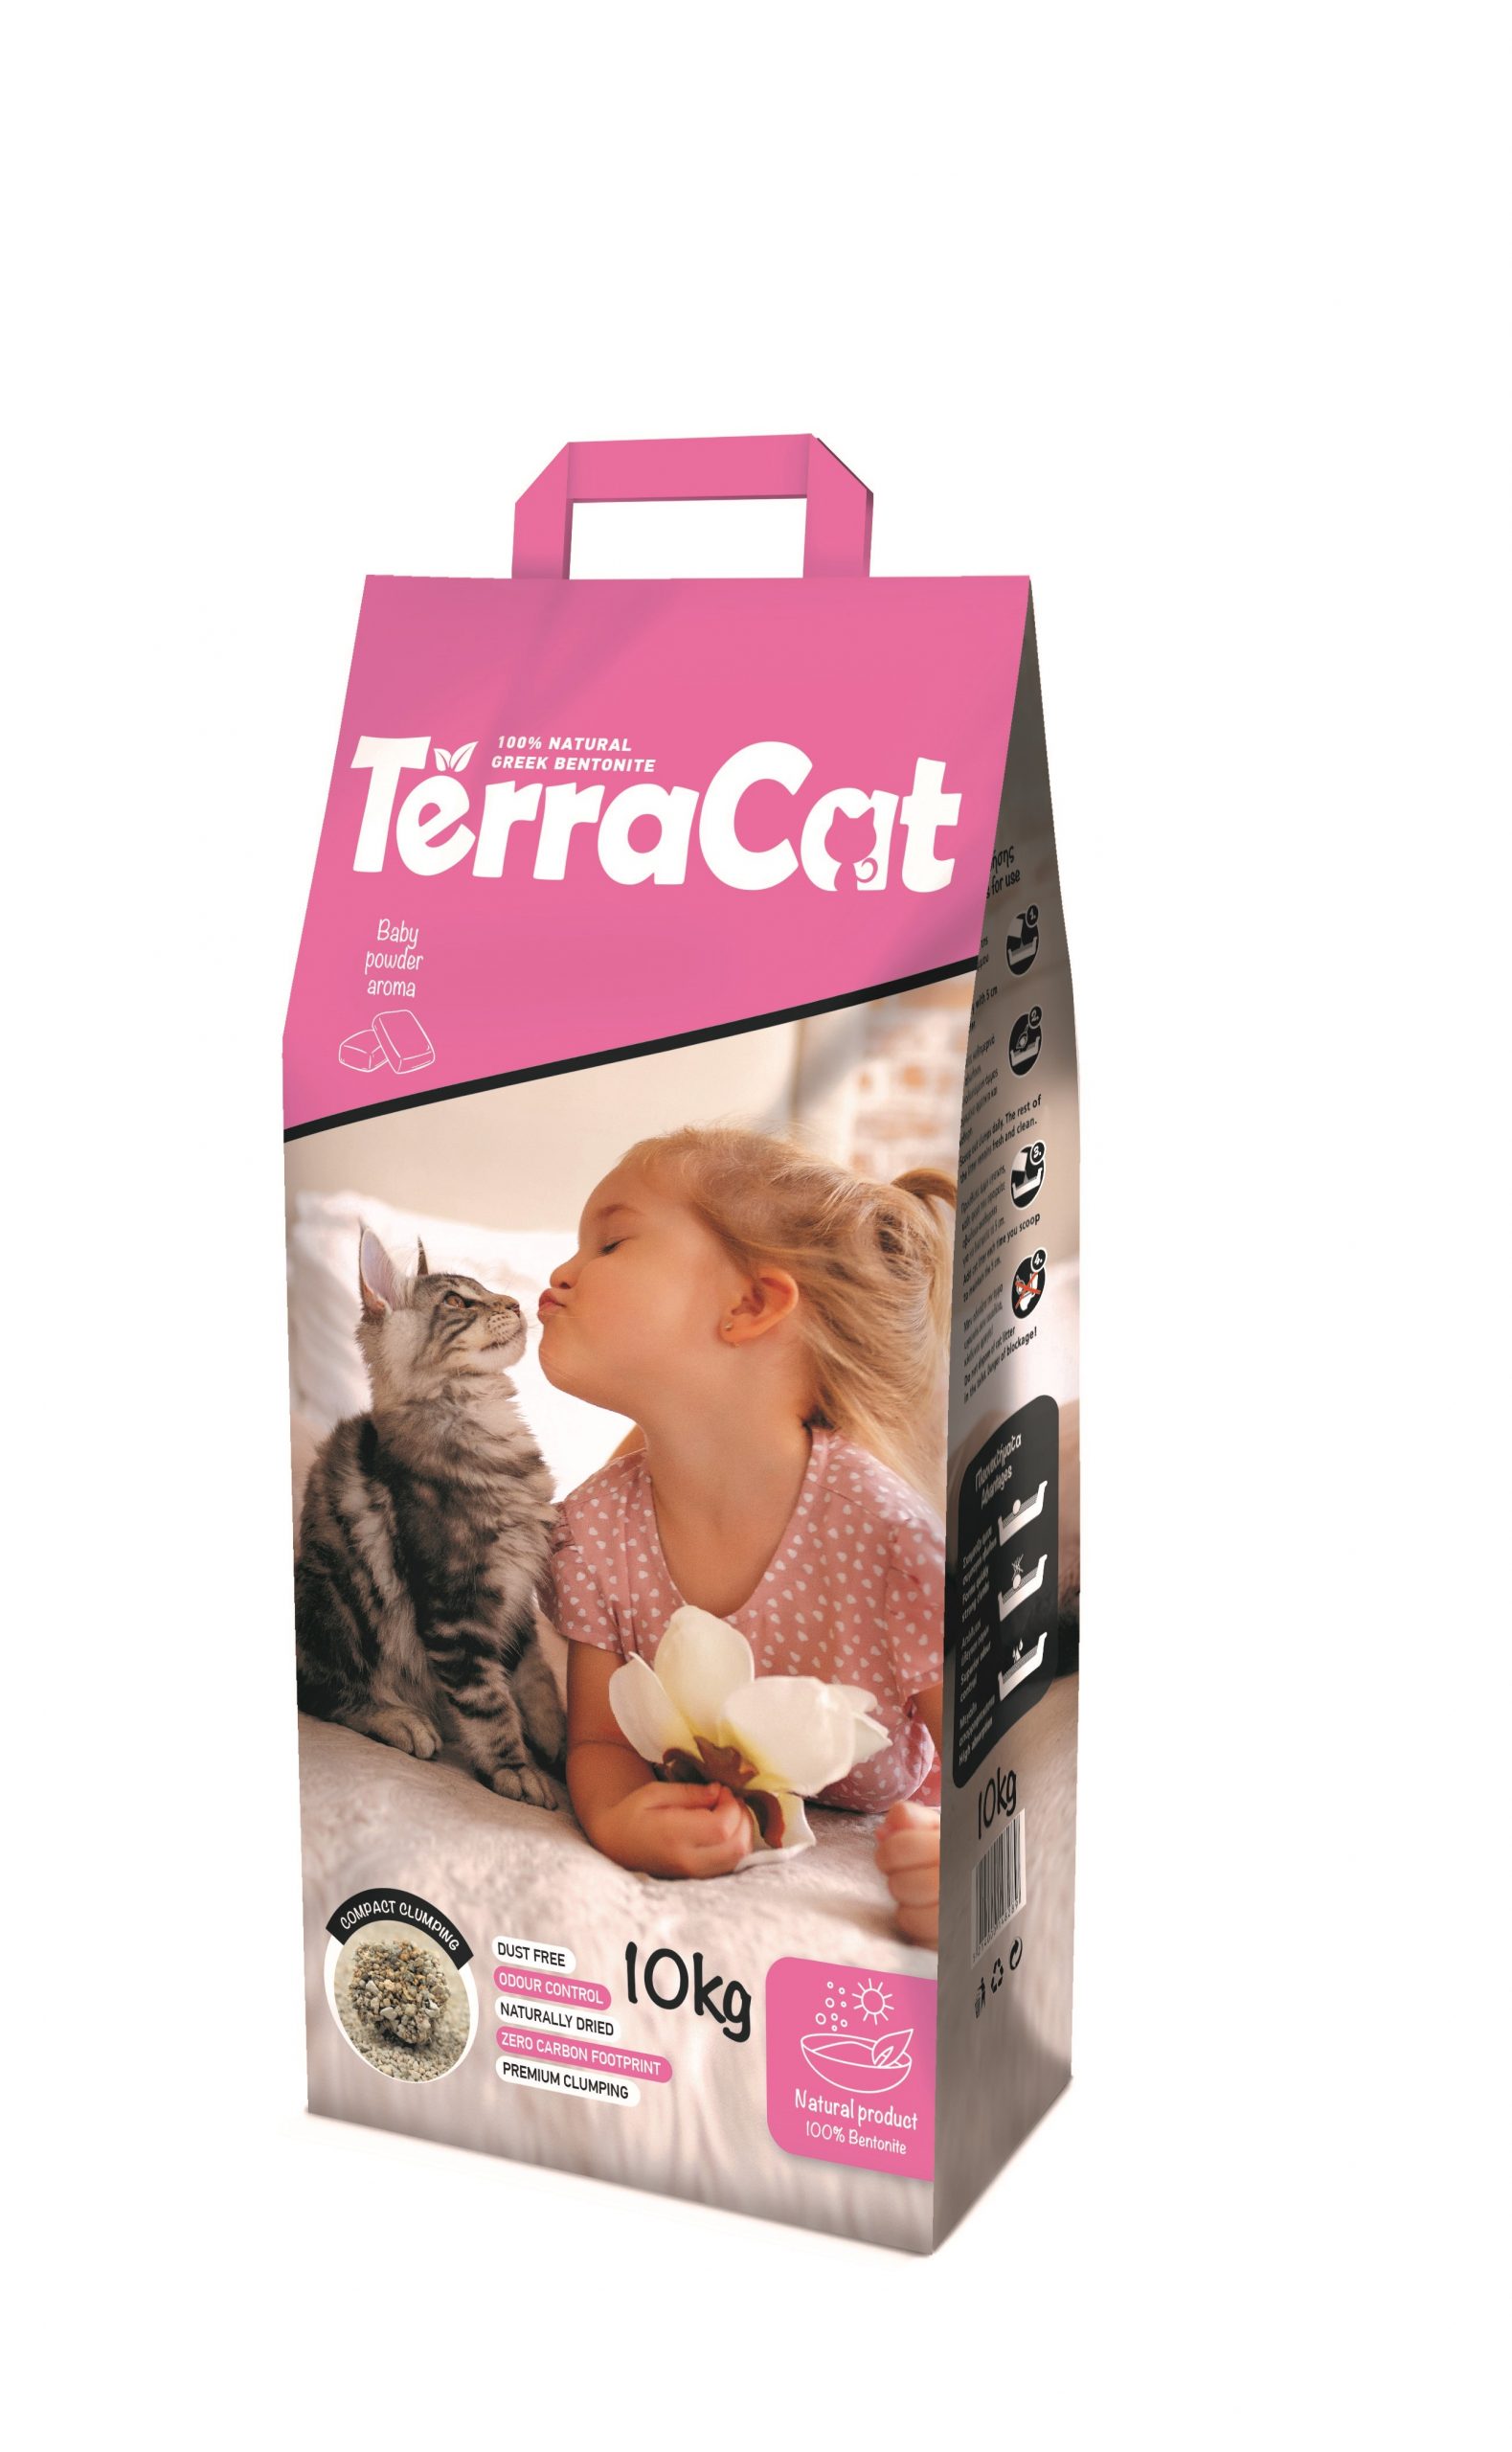 Terra cat with baby powder_10 kg